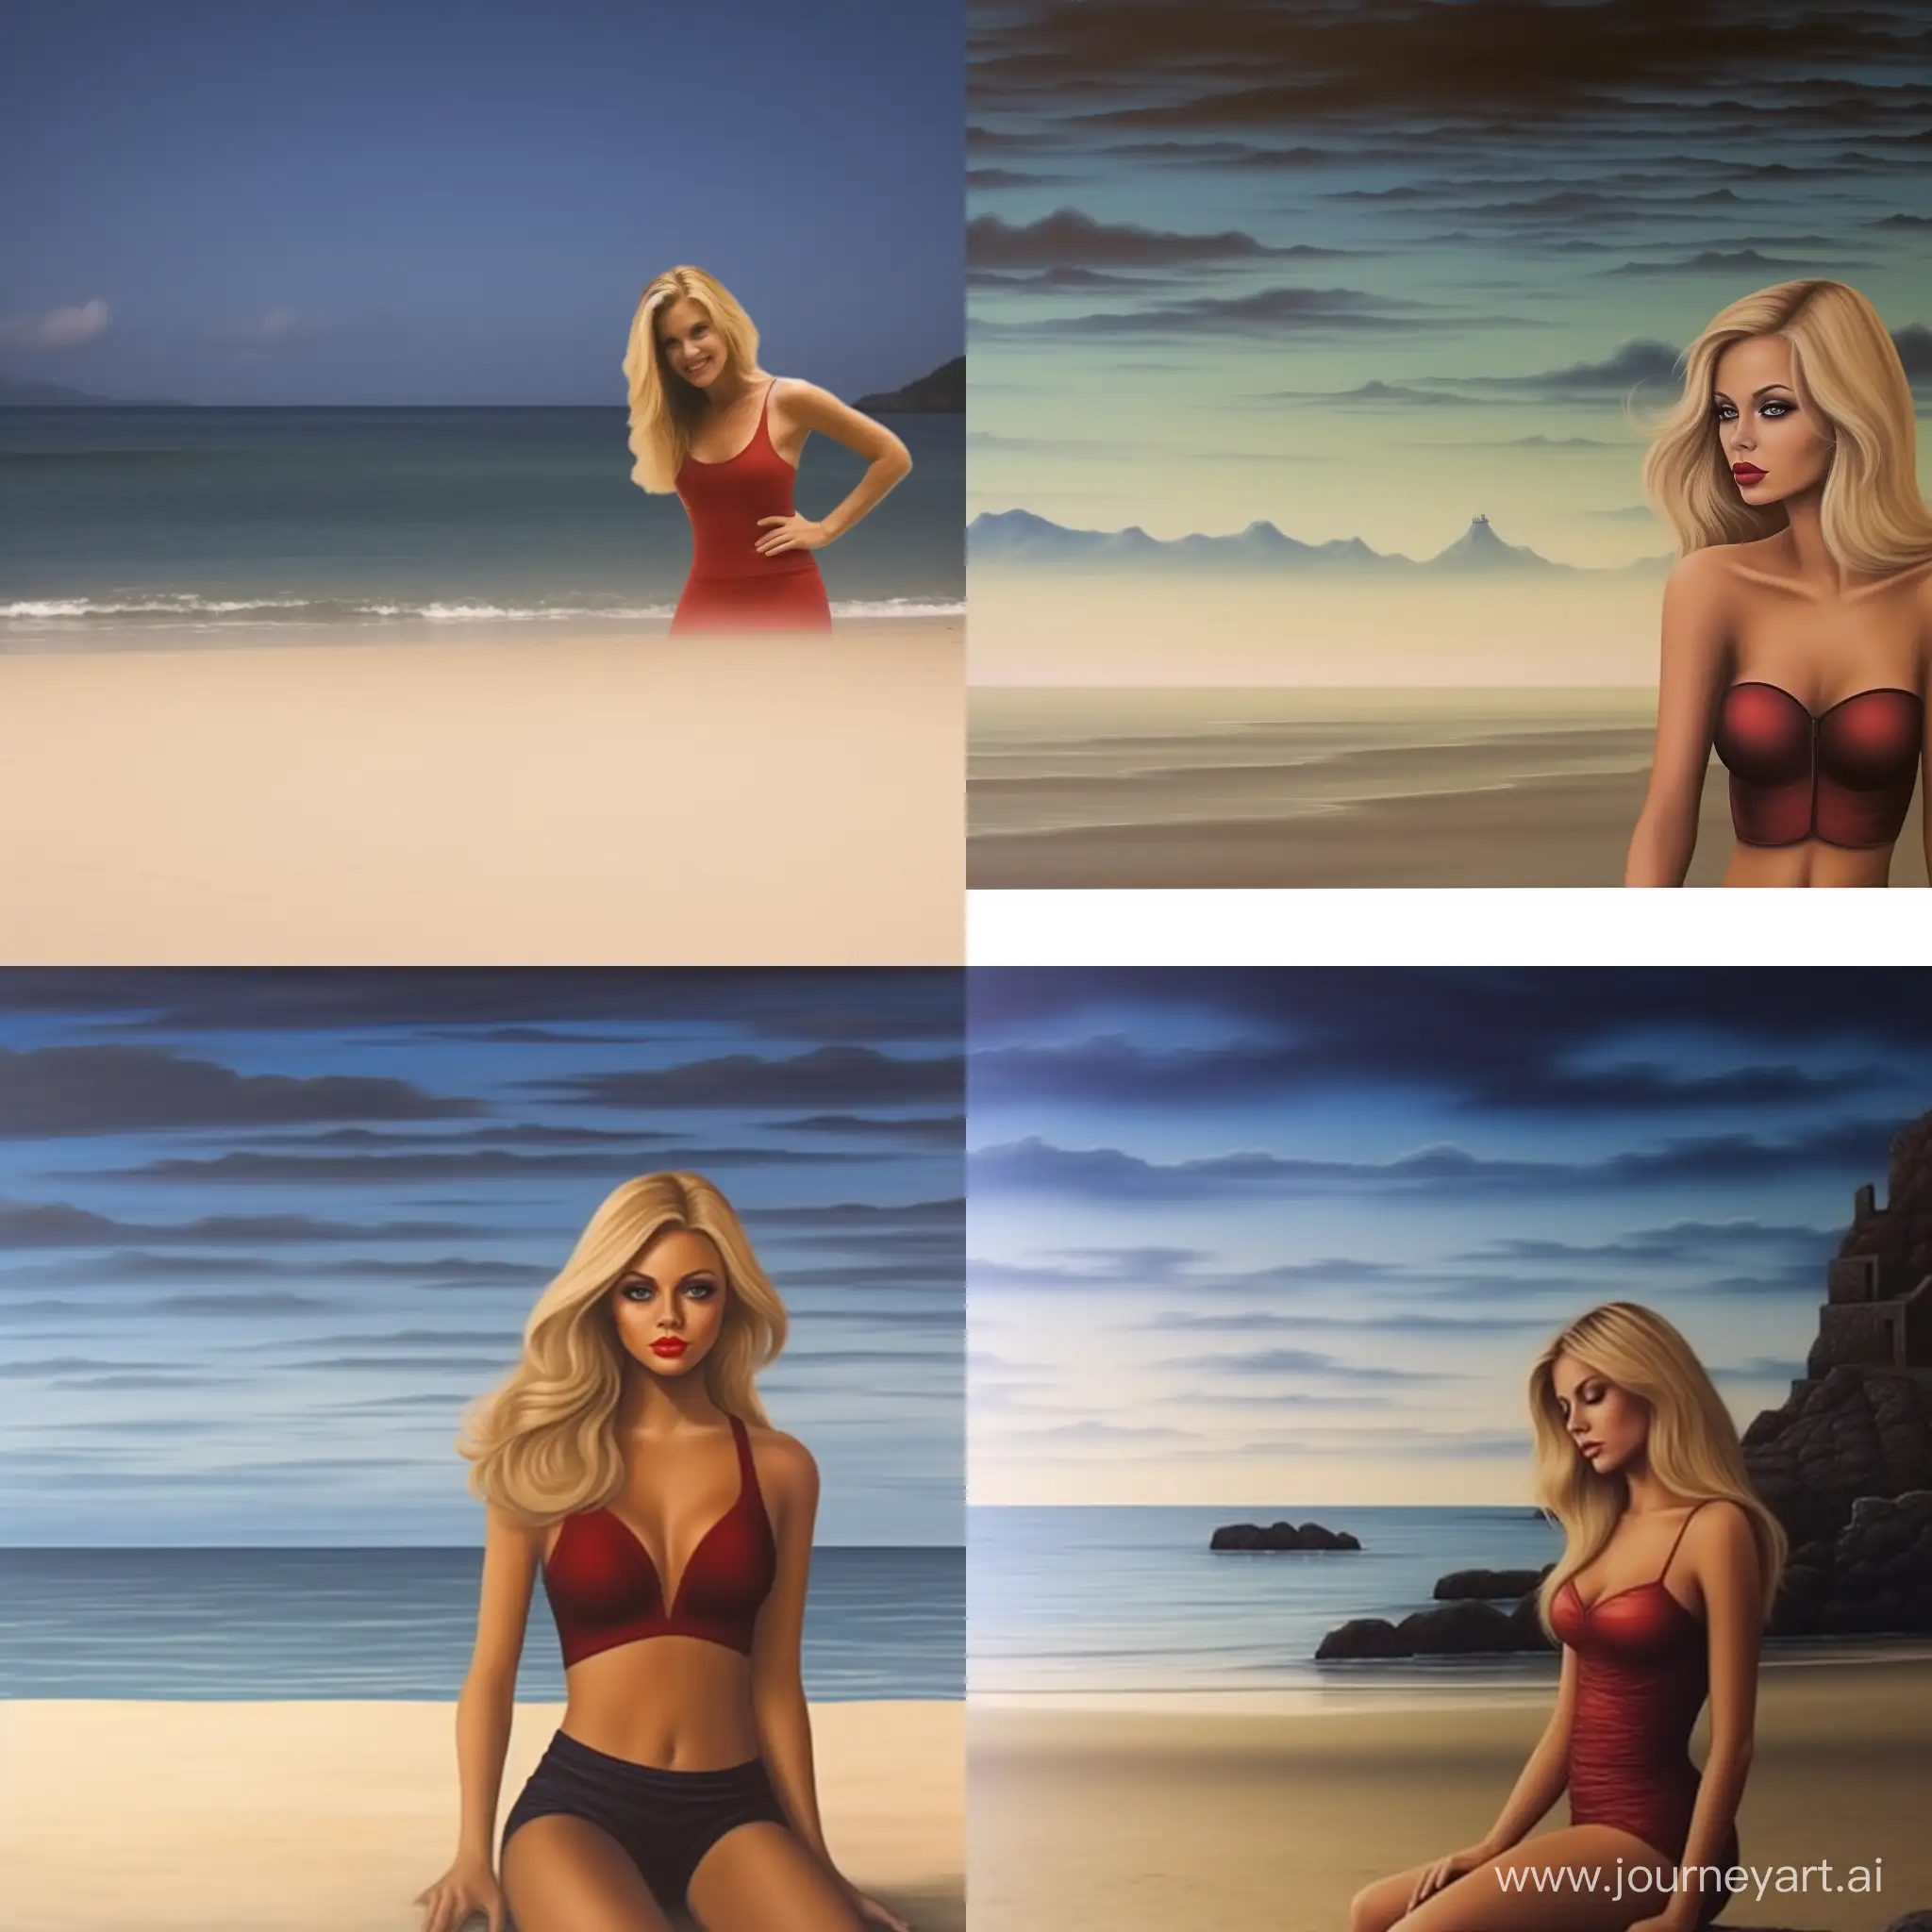 Beautiful blonde woman in a red bikini at the beach